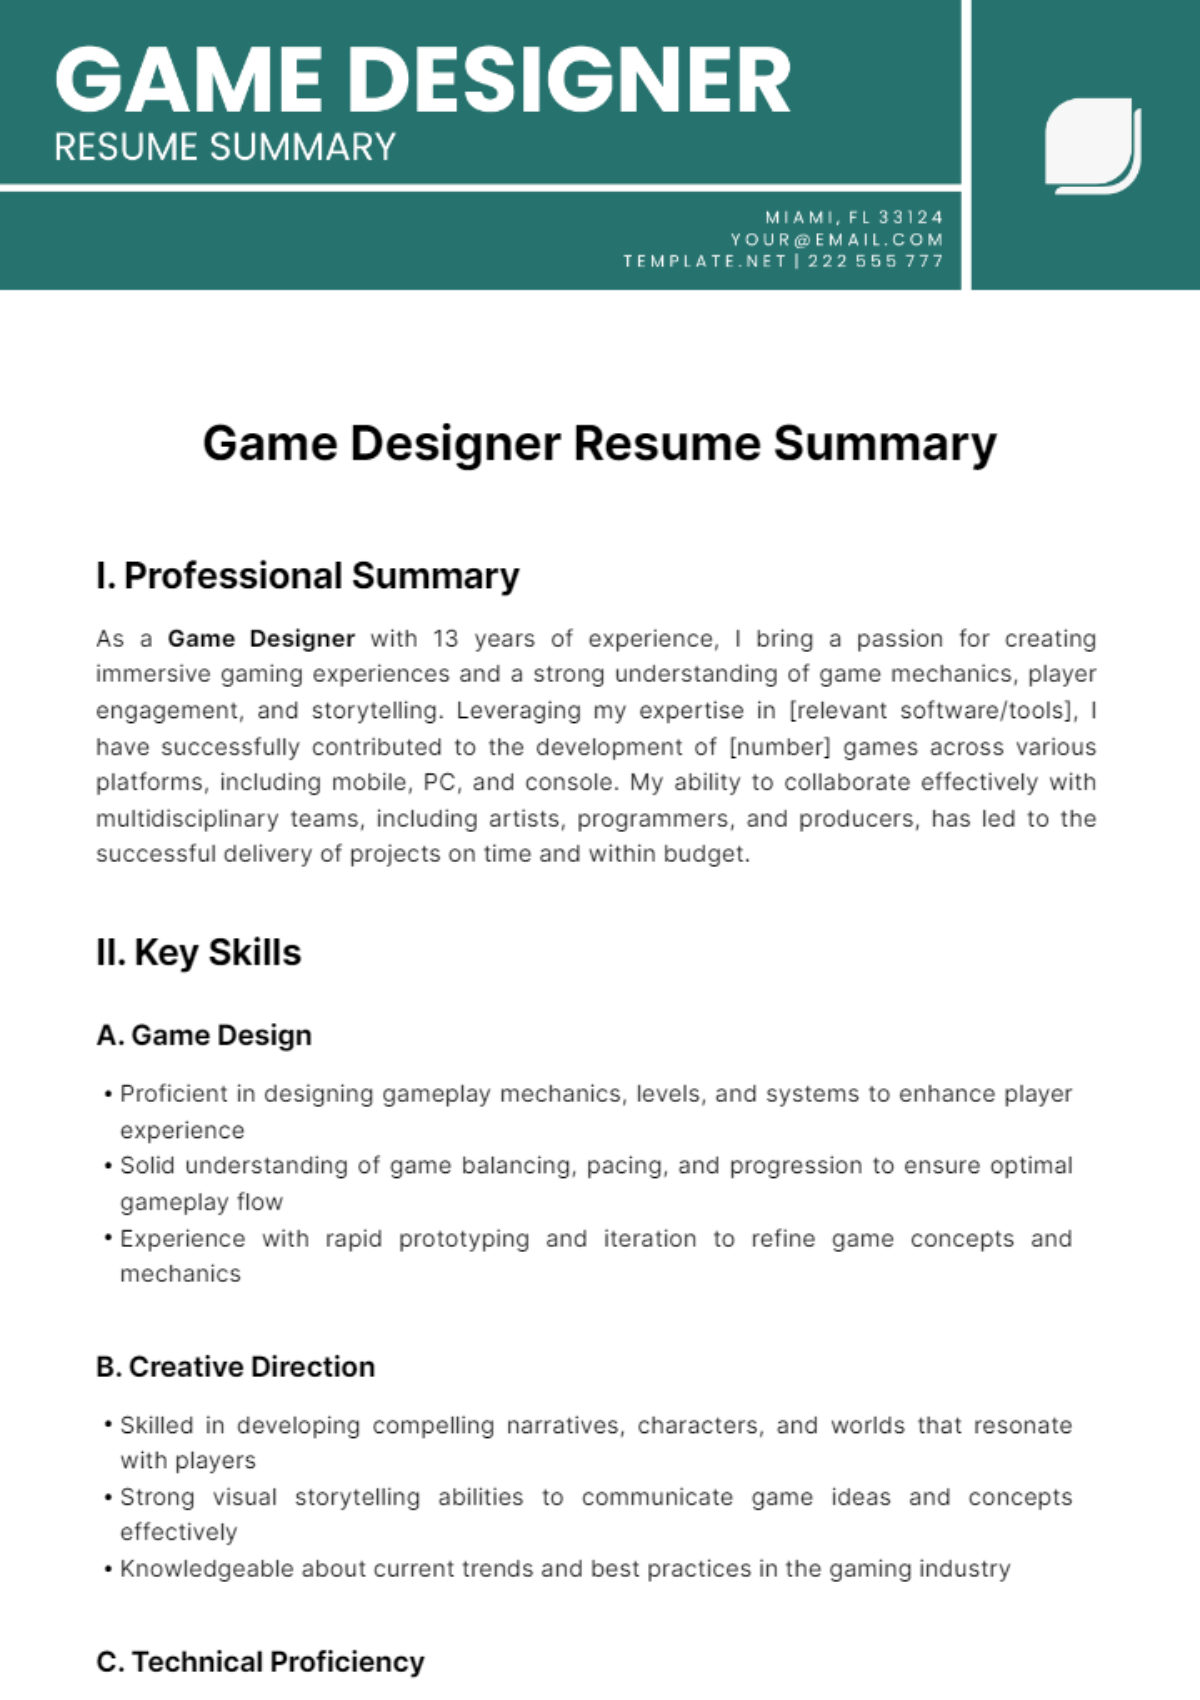 Free Game Designer Resume Summary Template